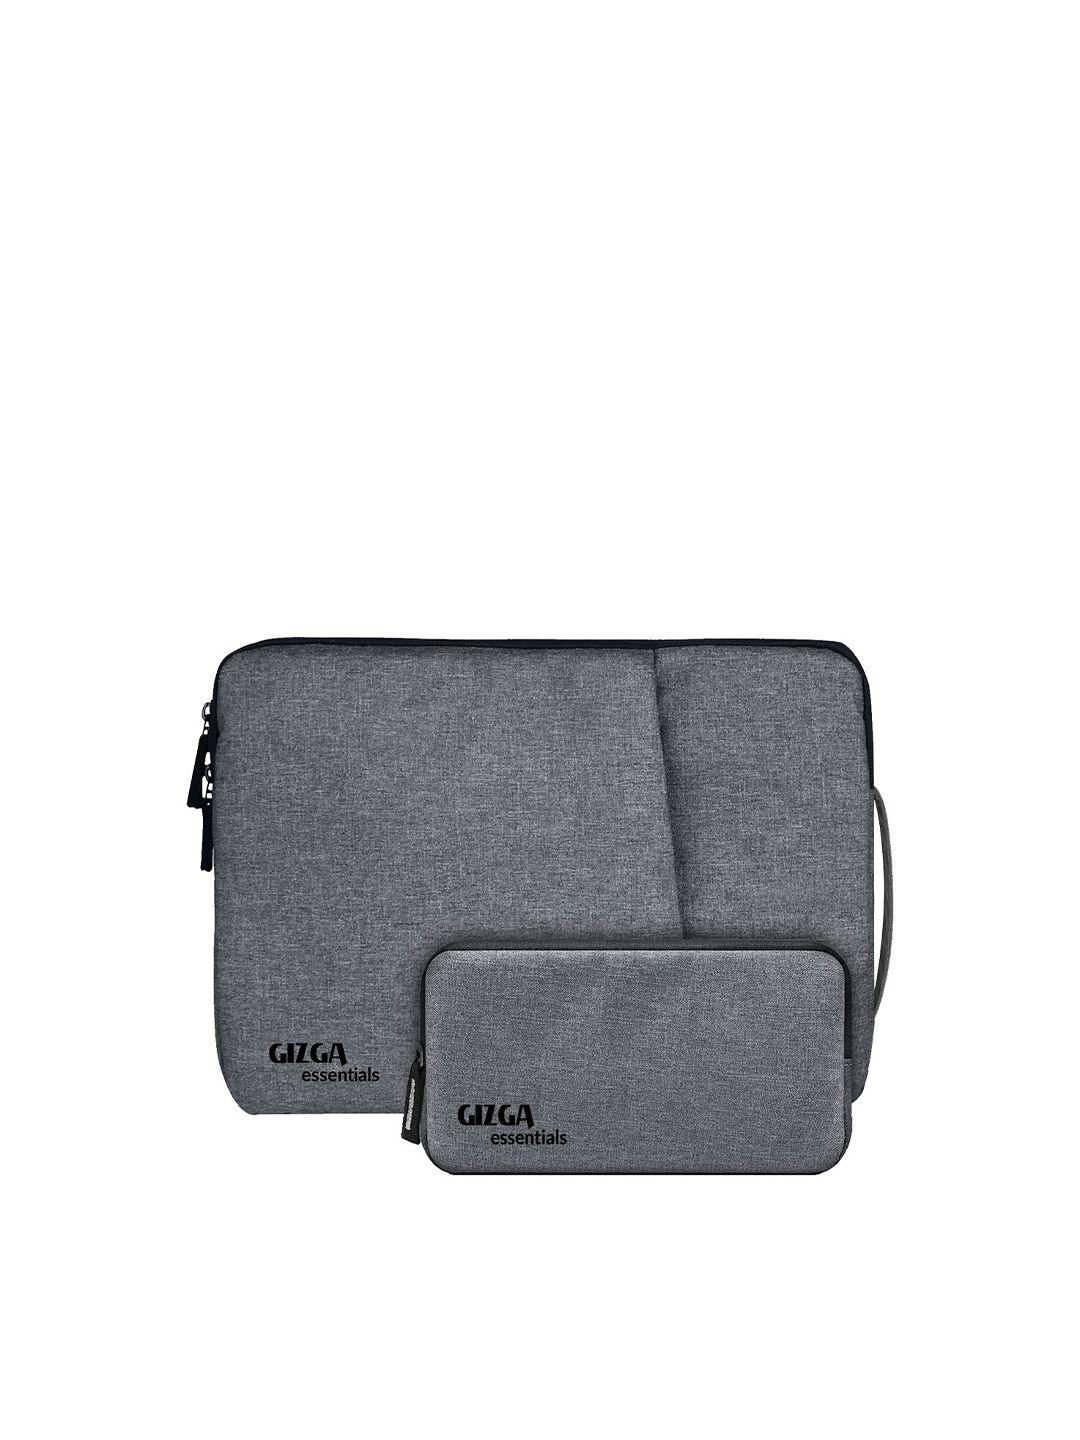 gizga essentials unisex grey & black laptop sleeve